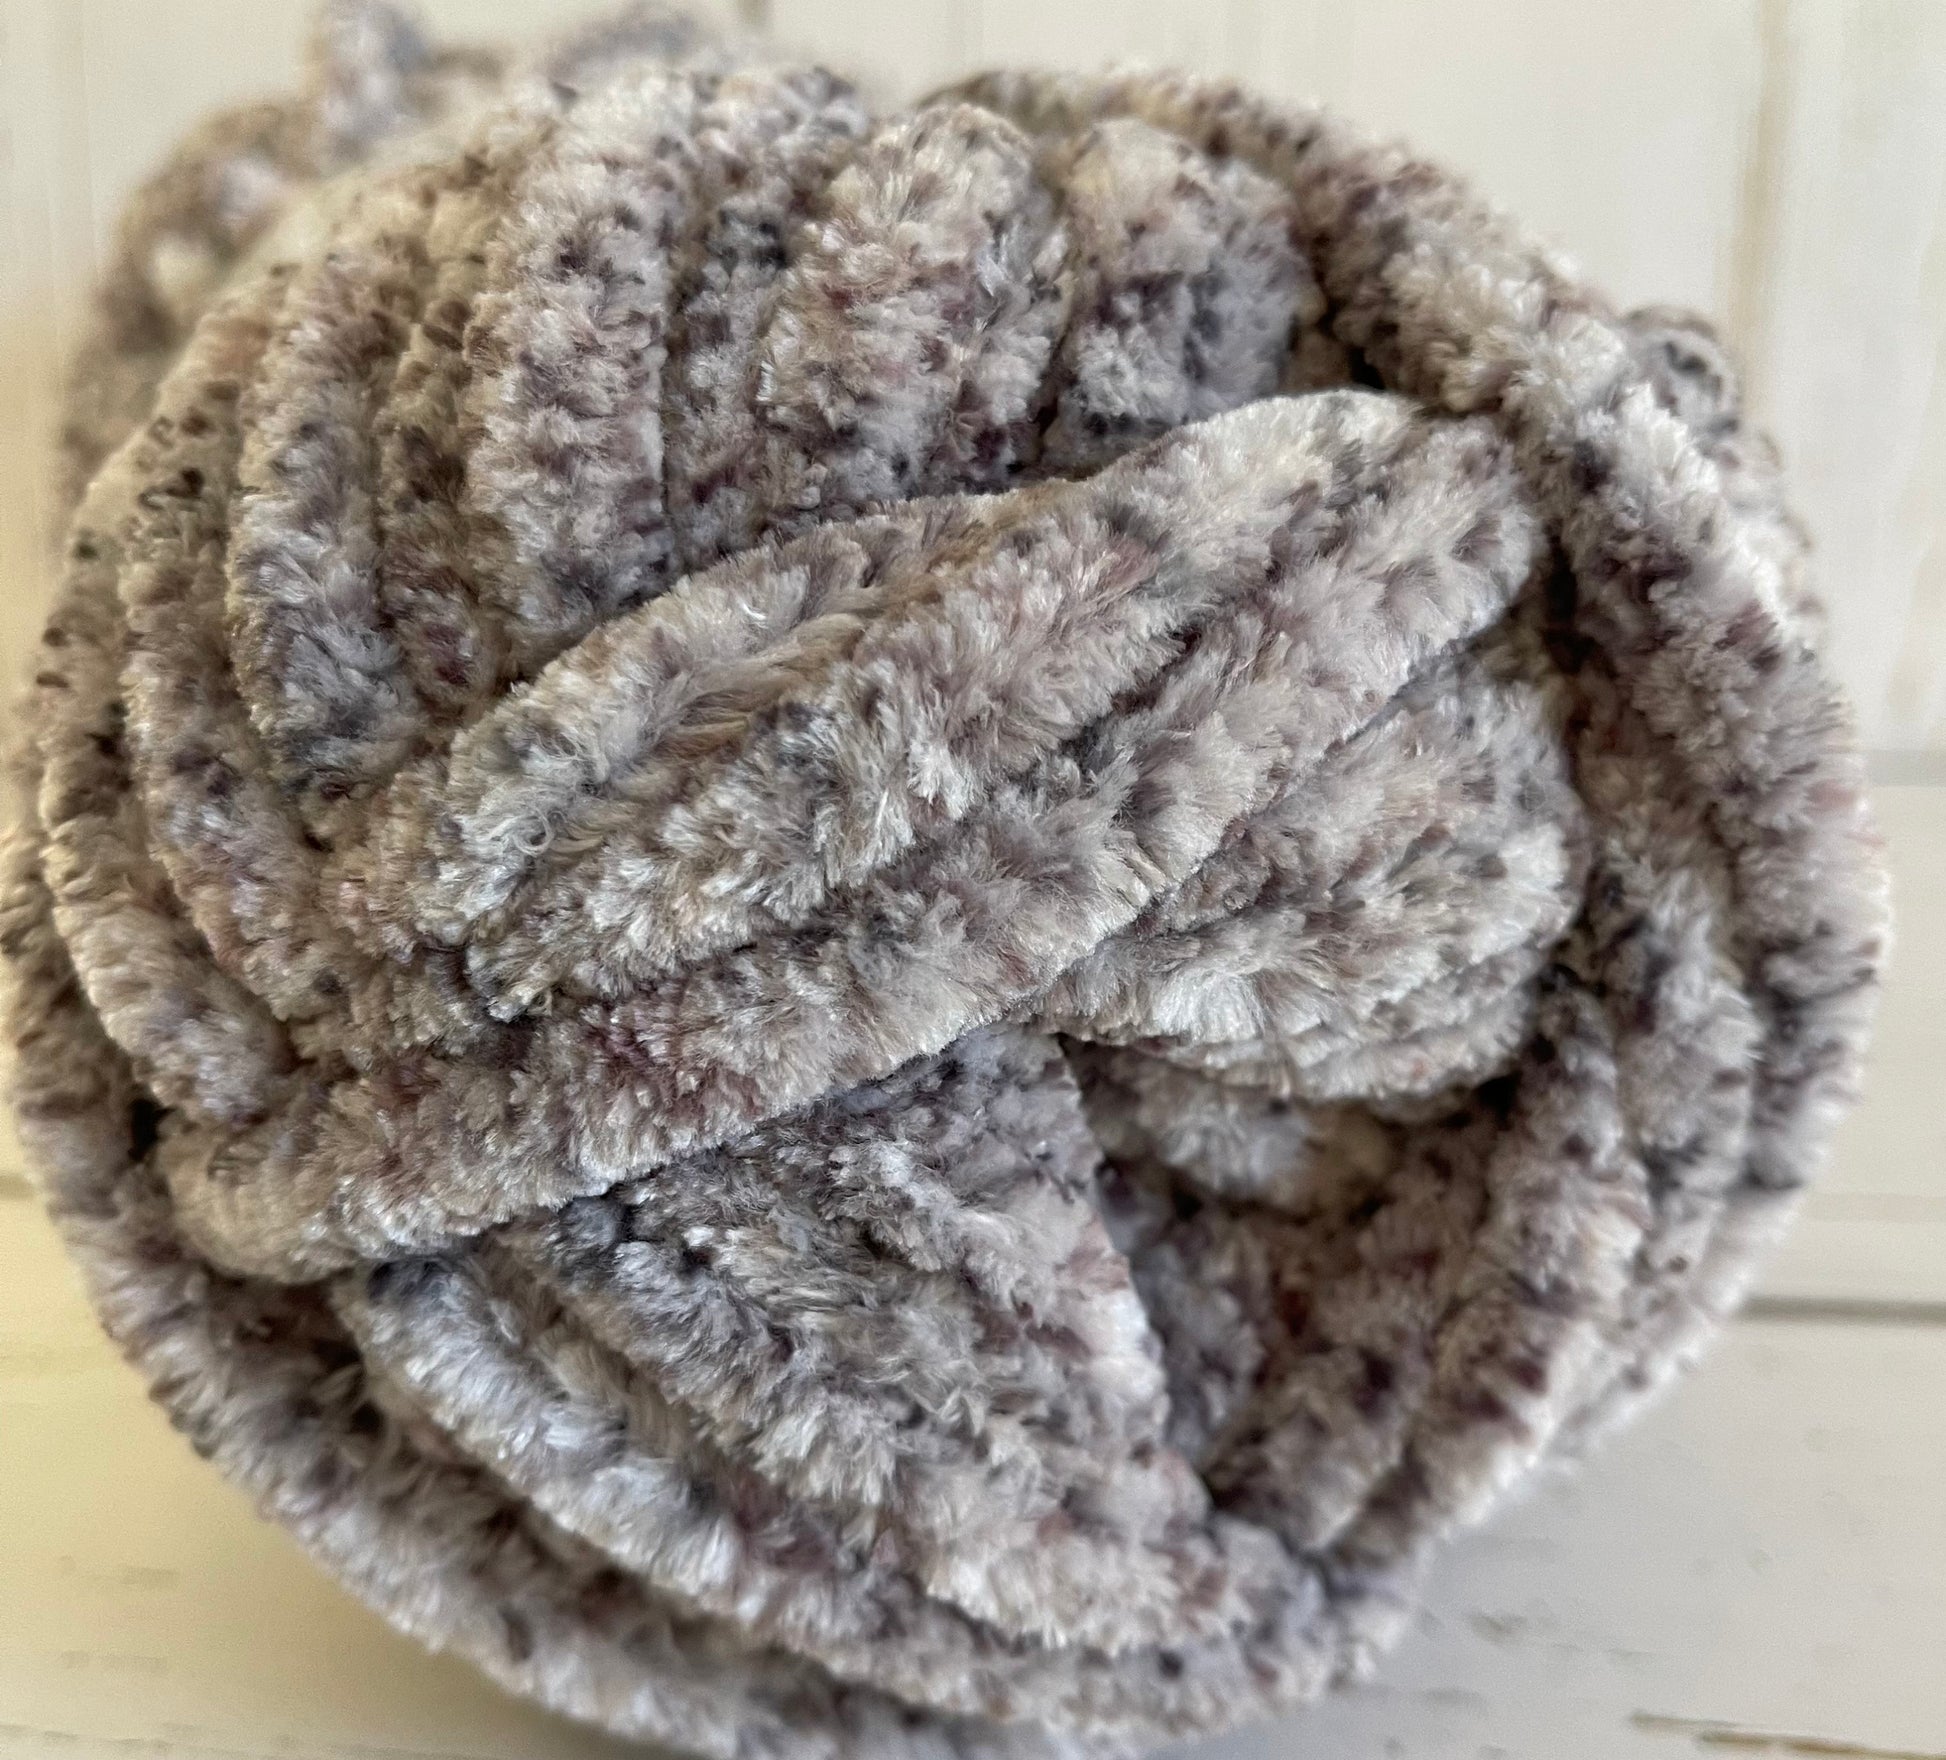 Chenille Home Heather ~ GRAY Yarn – Yarn 2 Blanket